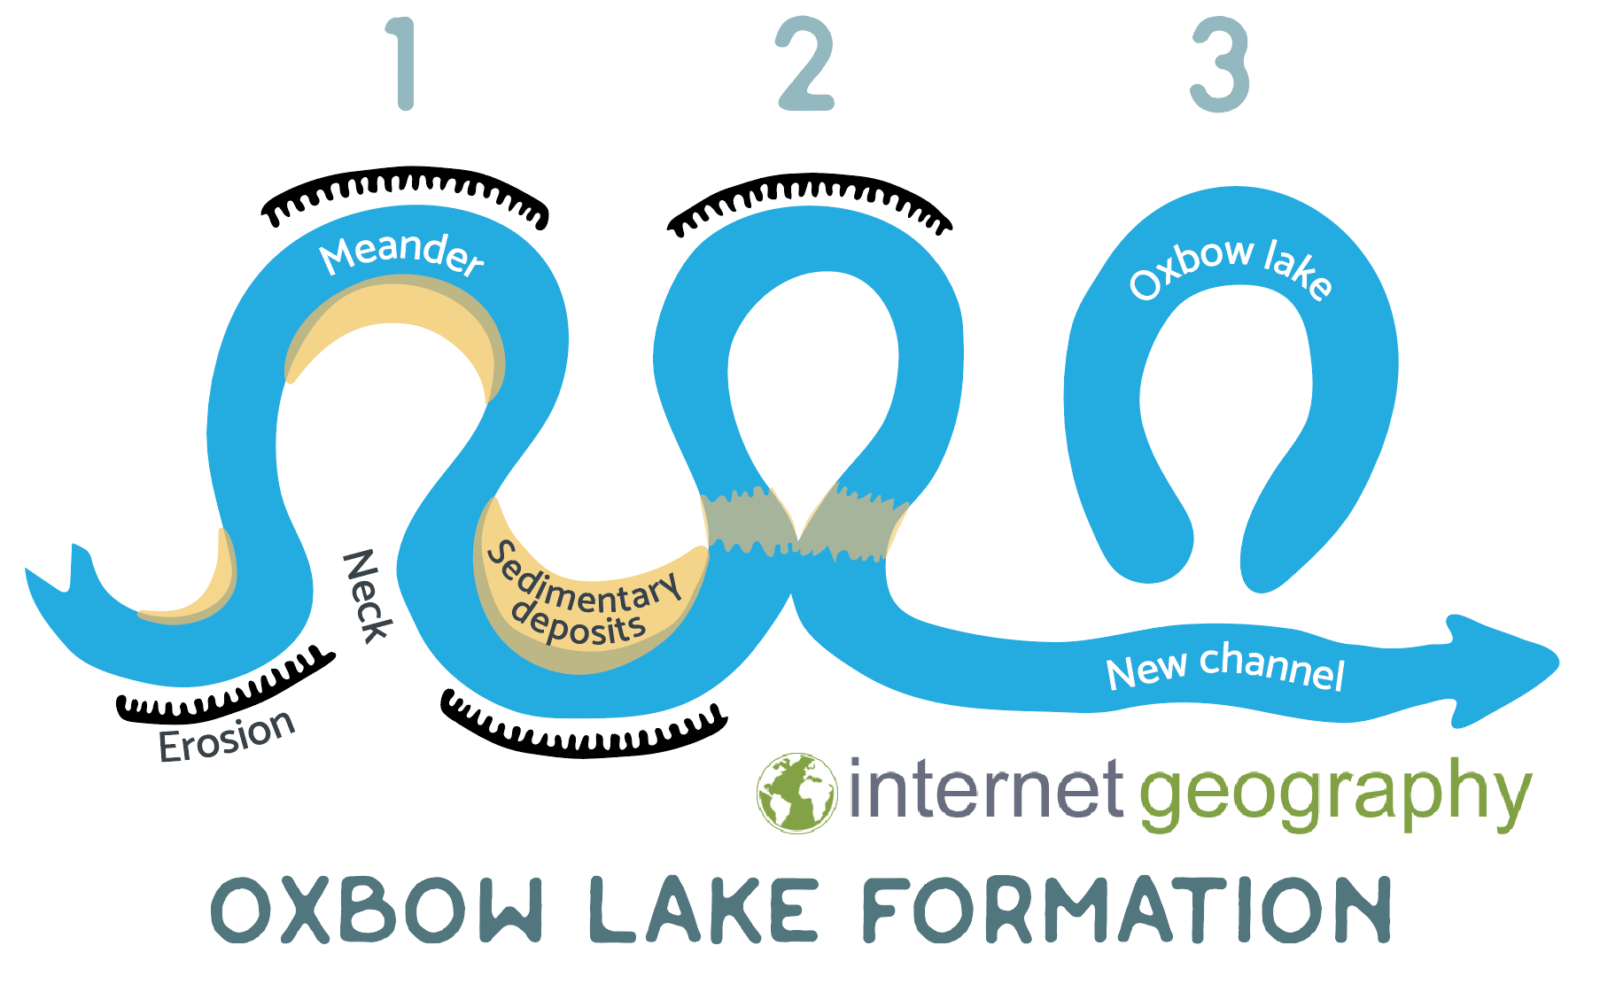 oxbow lake definition